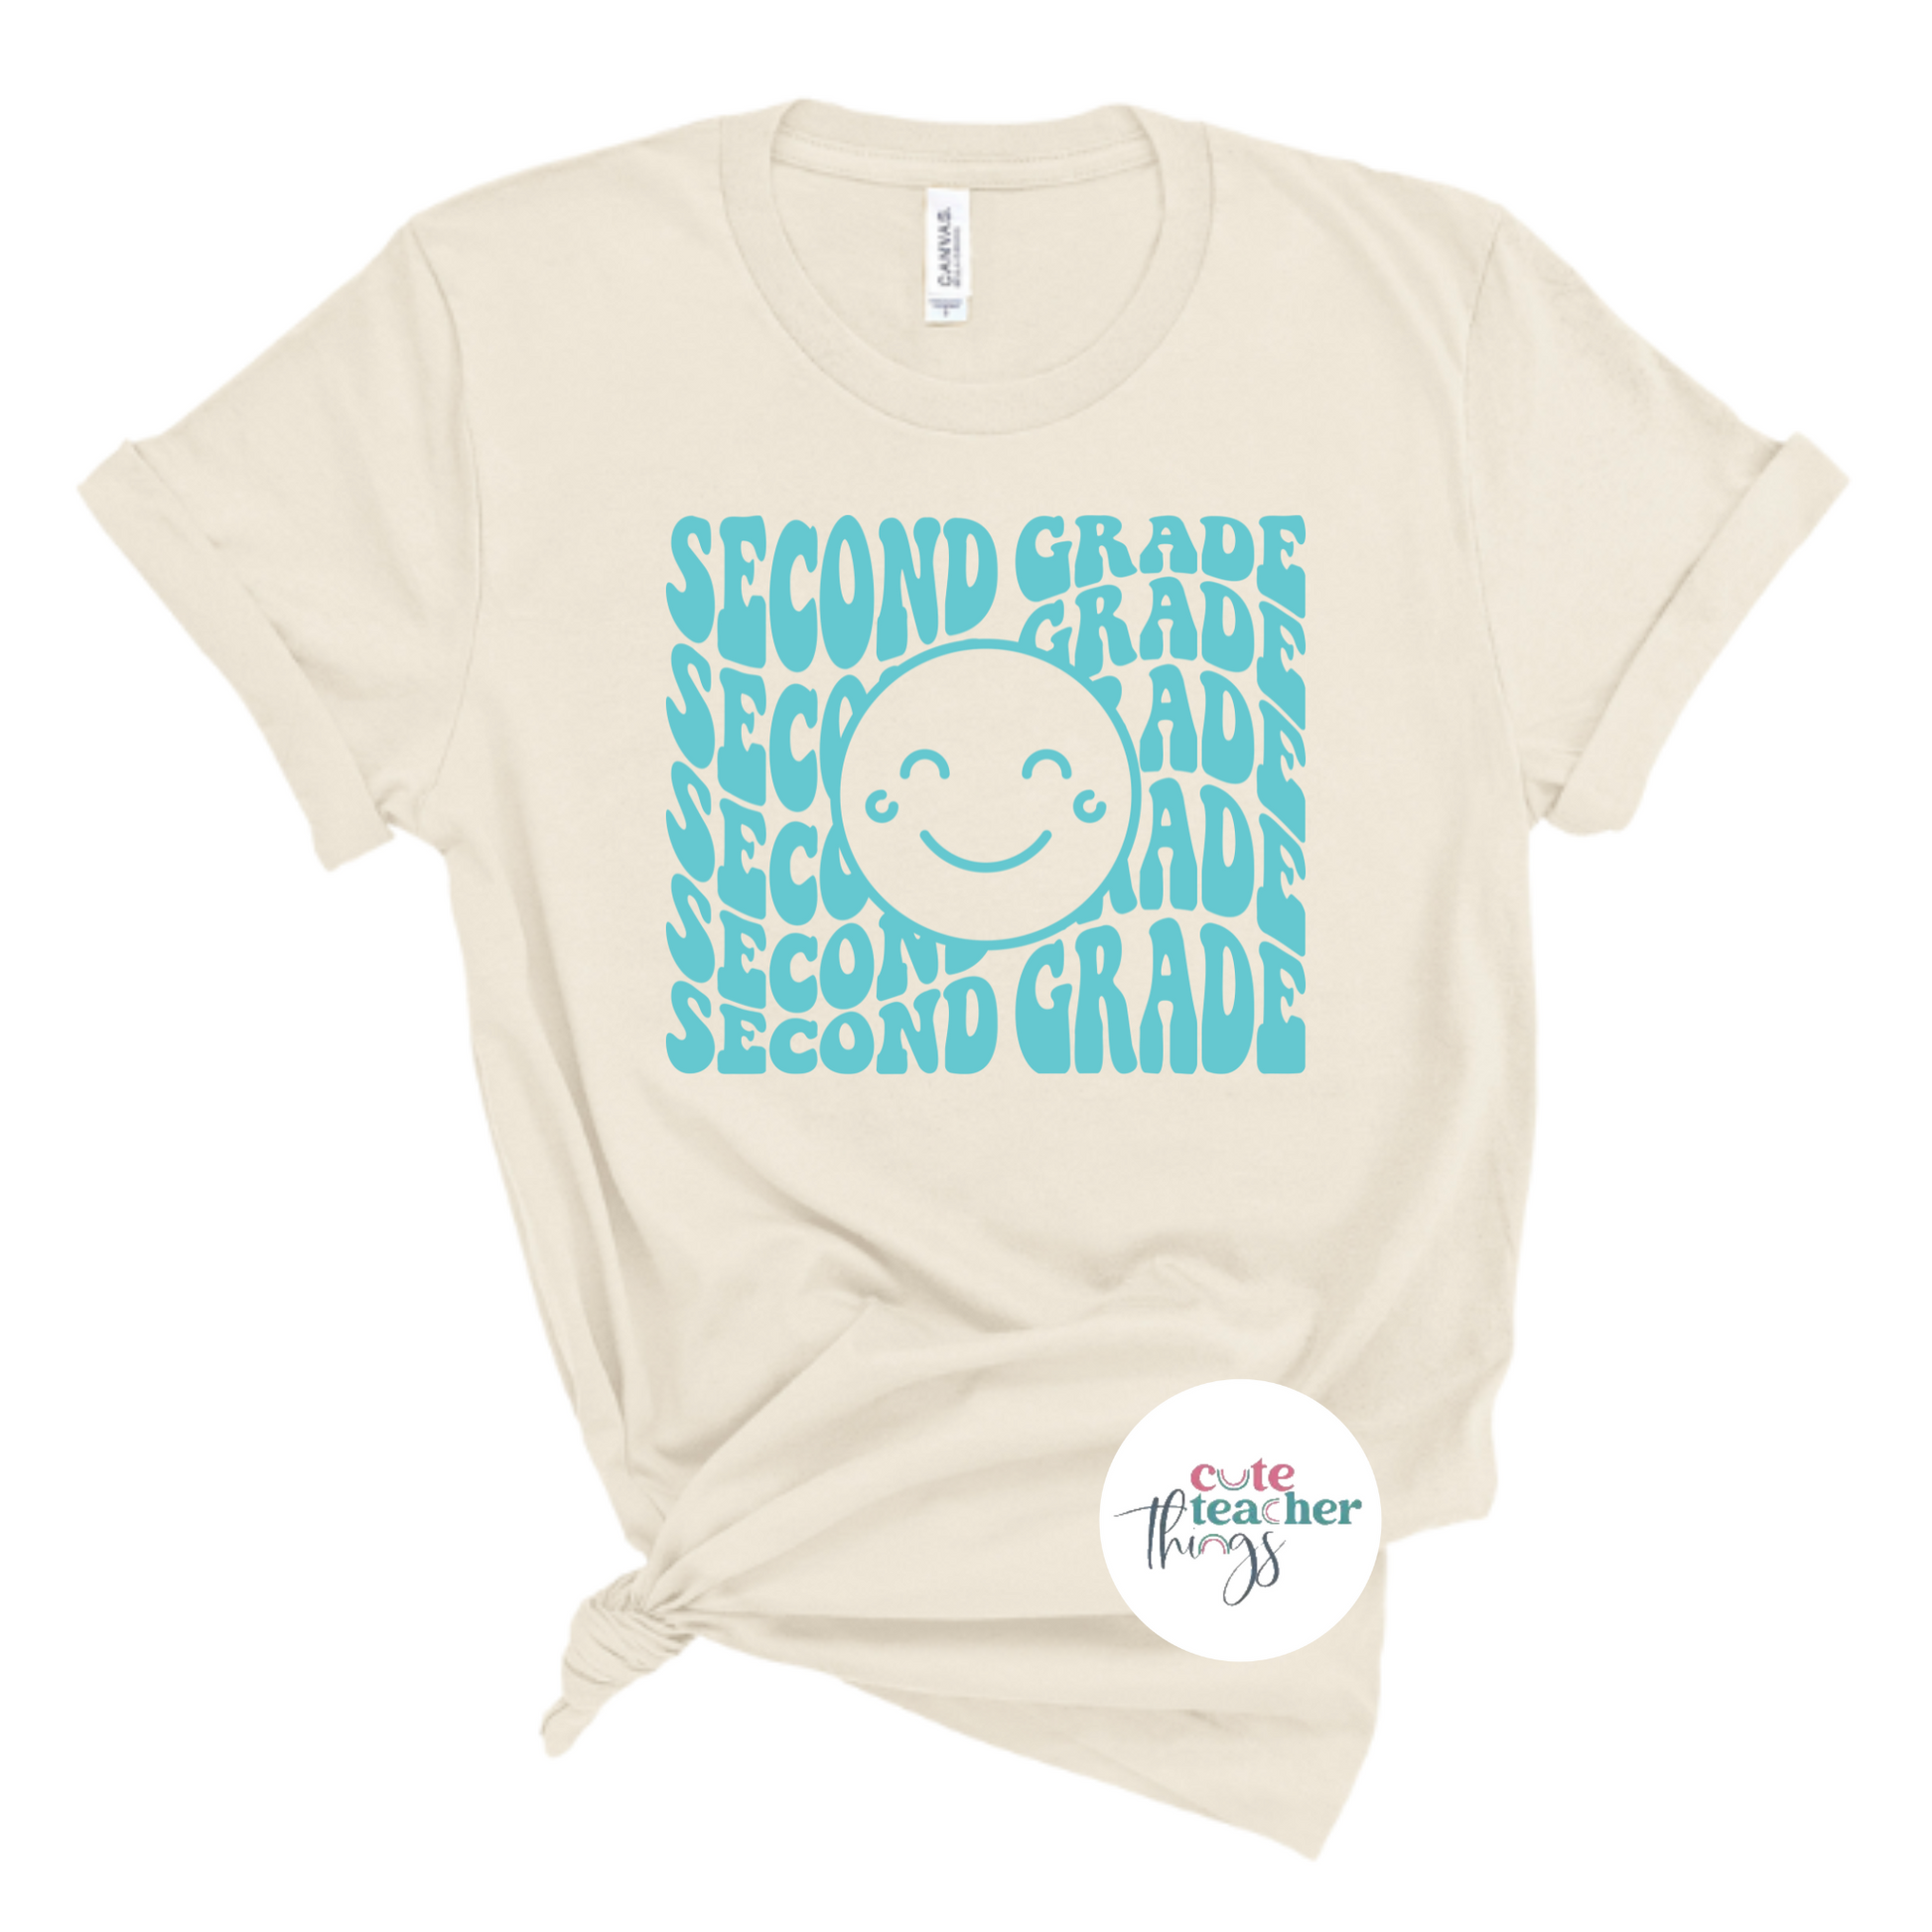 perfect gift idea for second grade teacher, good vibes t-shirt, back to school shirt